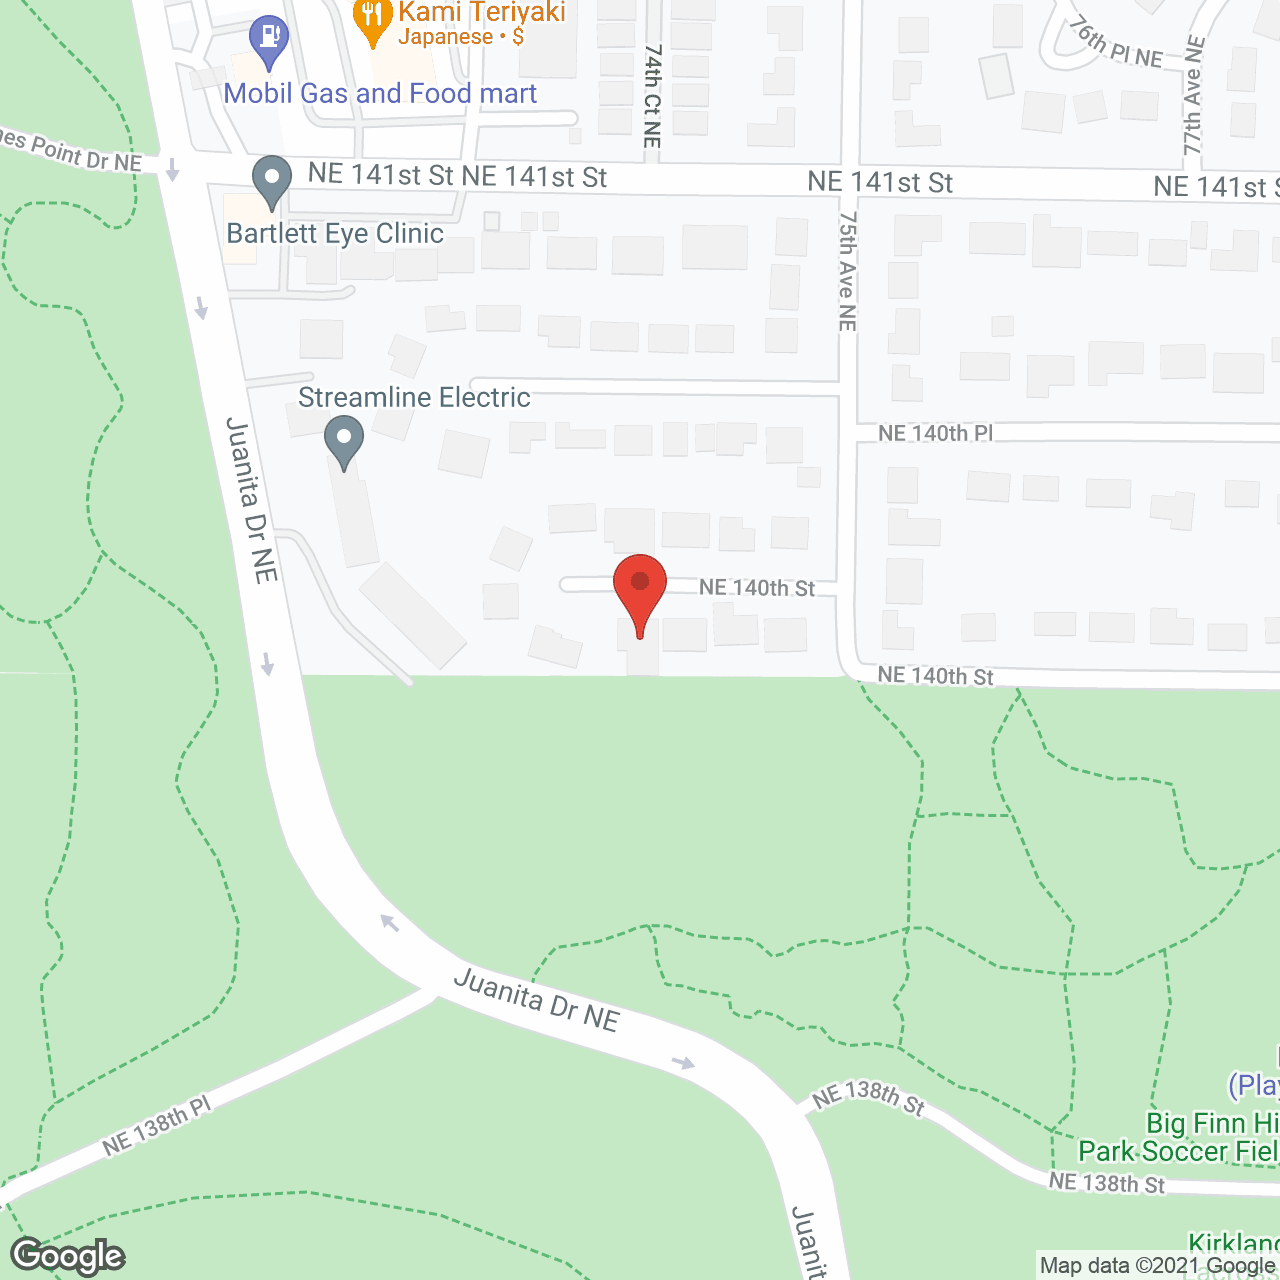 Finn Hill Park AFH in google map